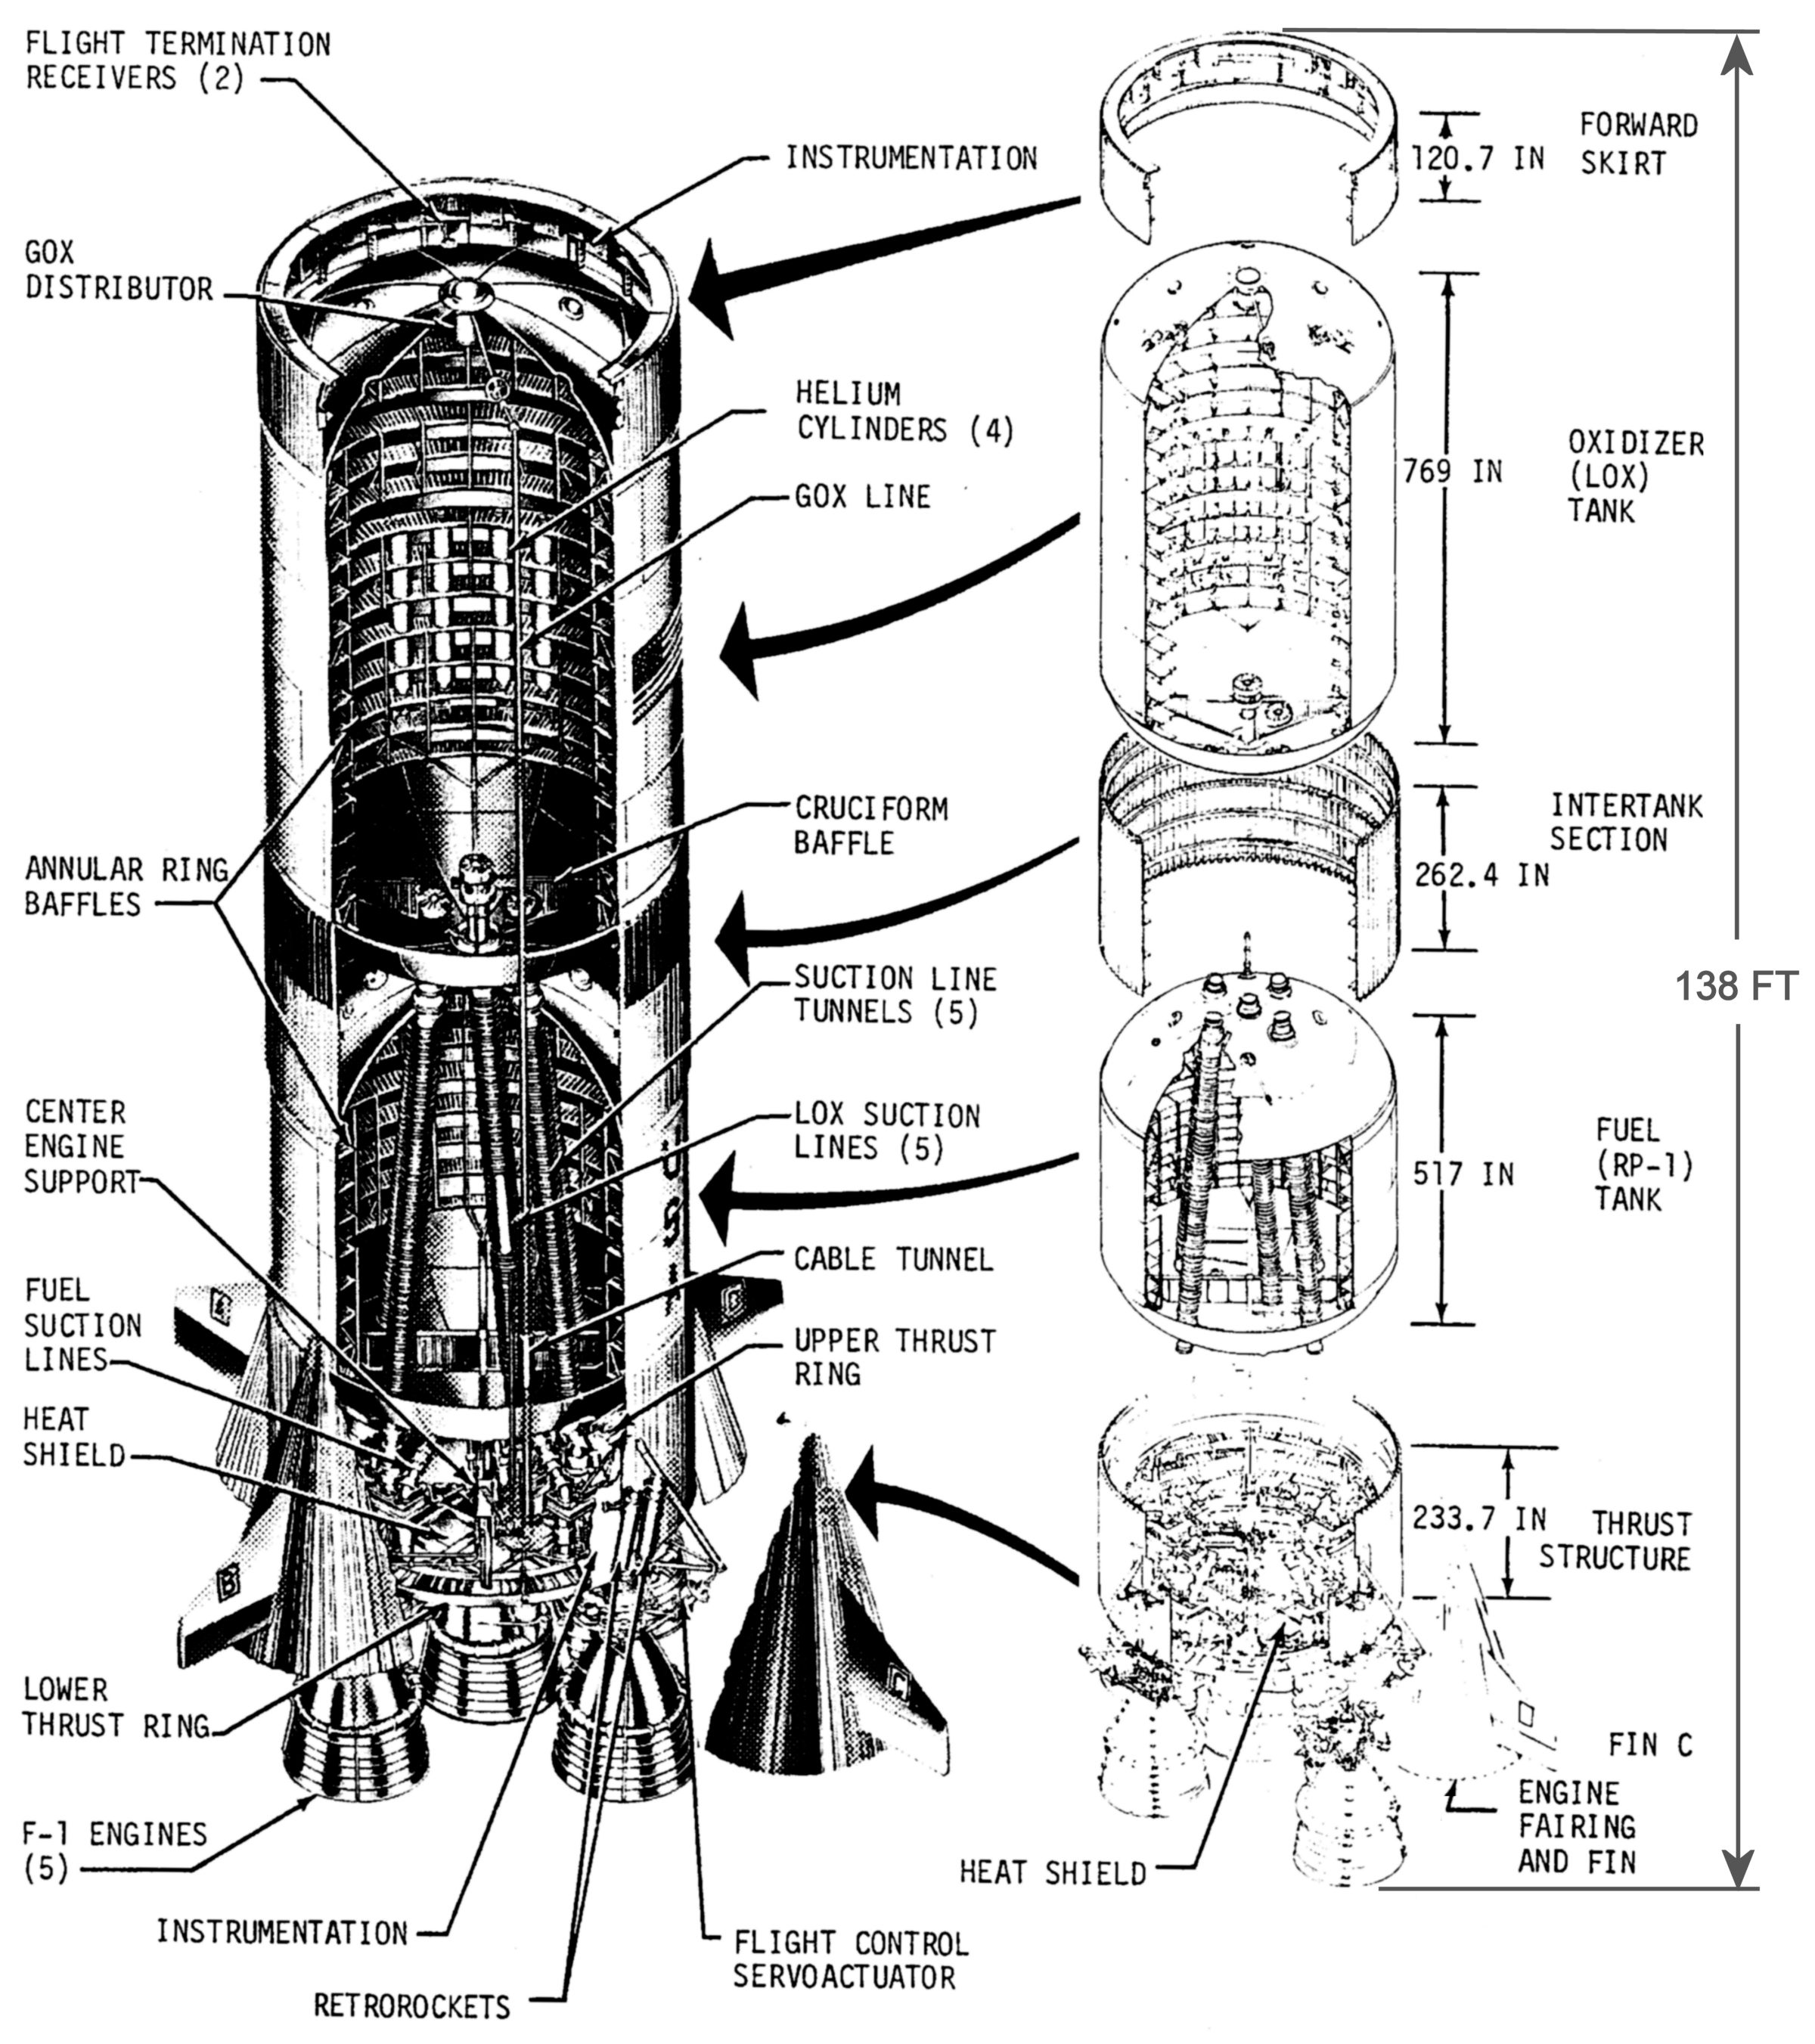 Rocket Propulsion Evolution: 8.10 - S-IC Stage